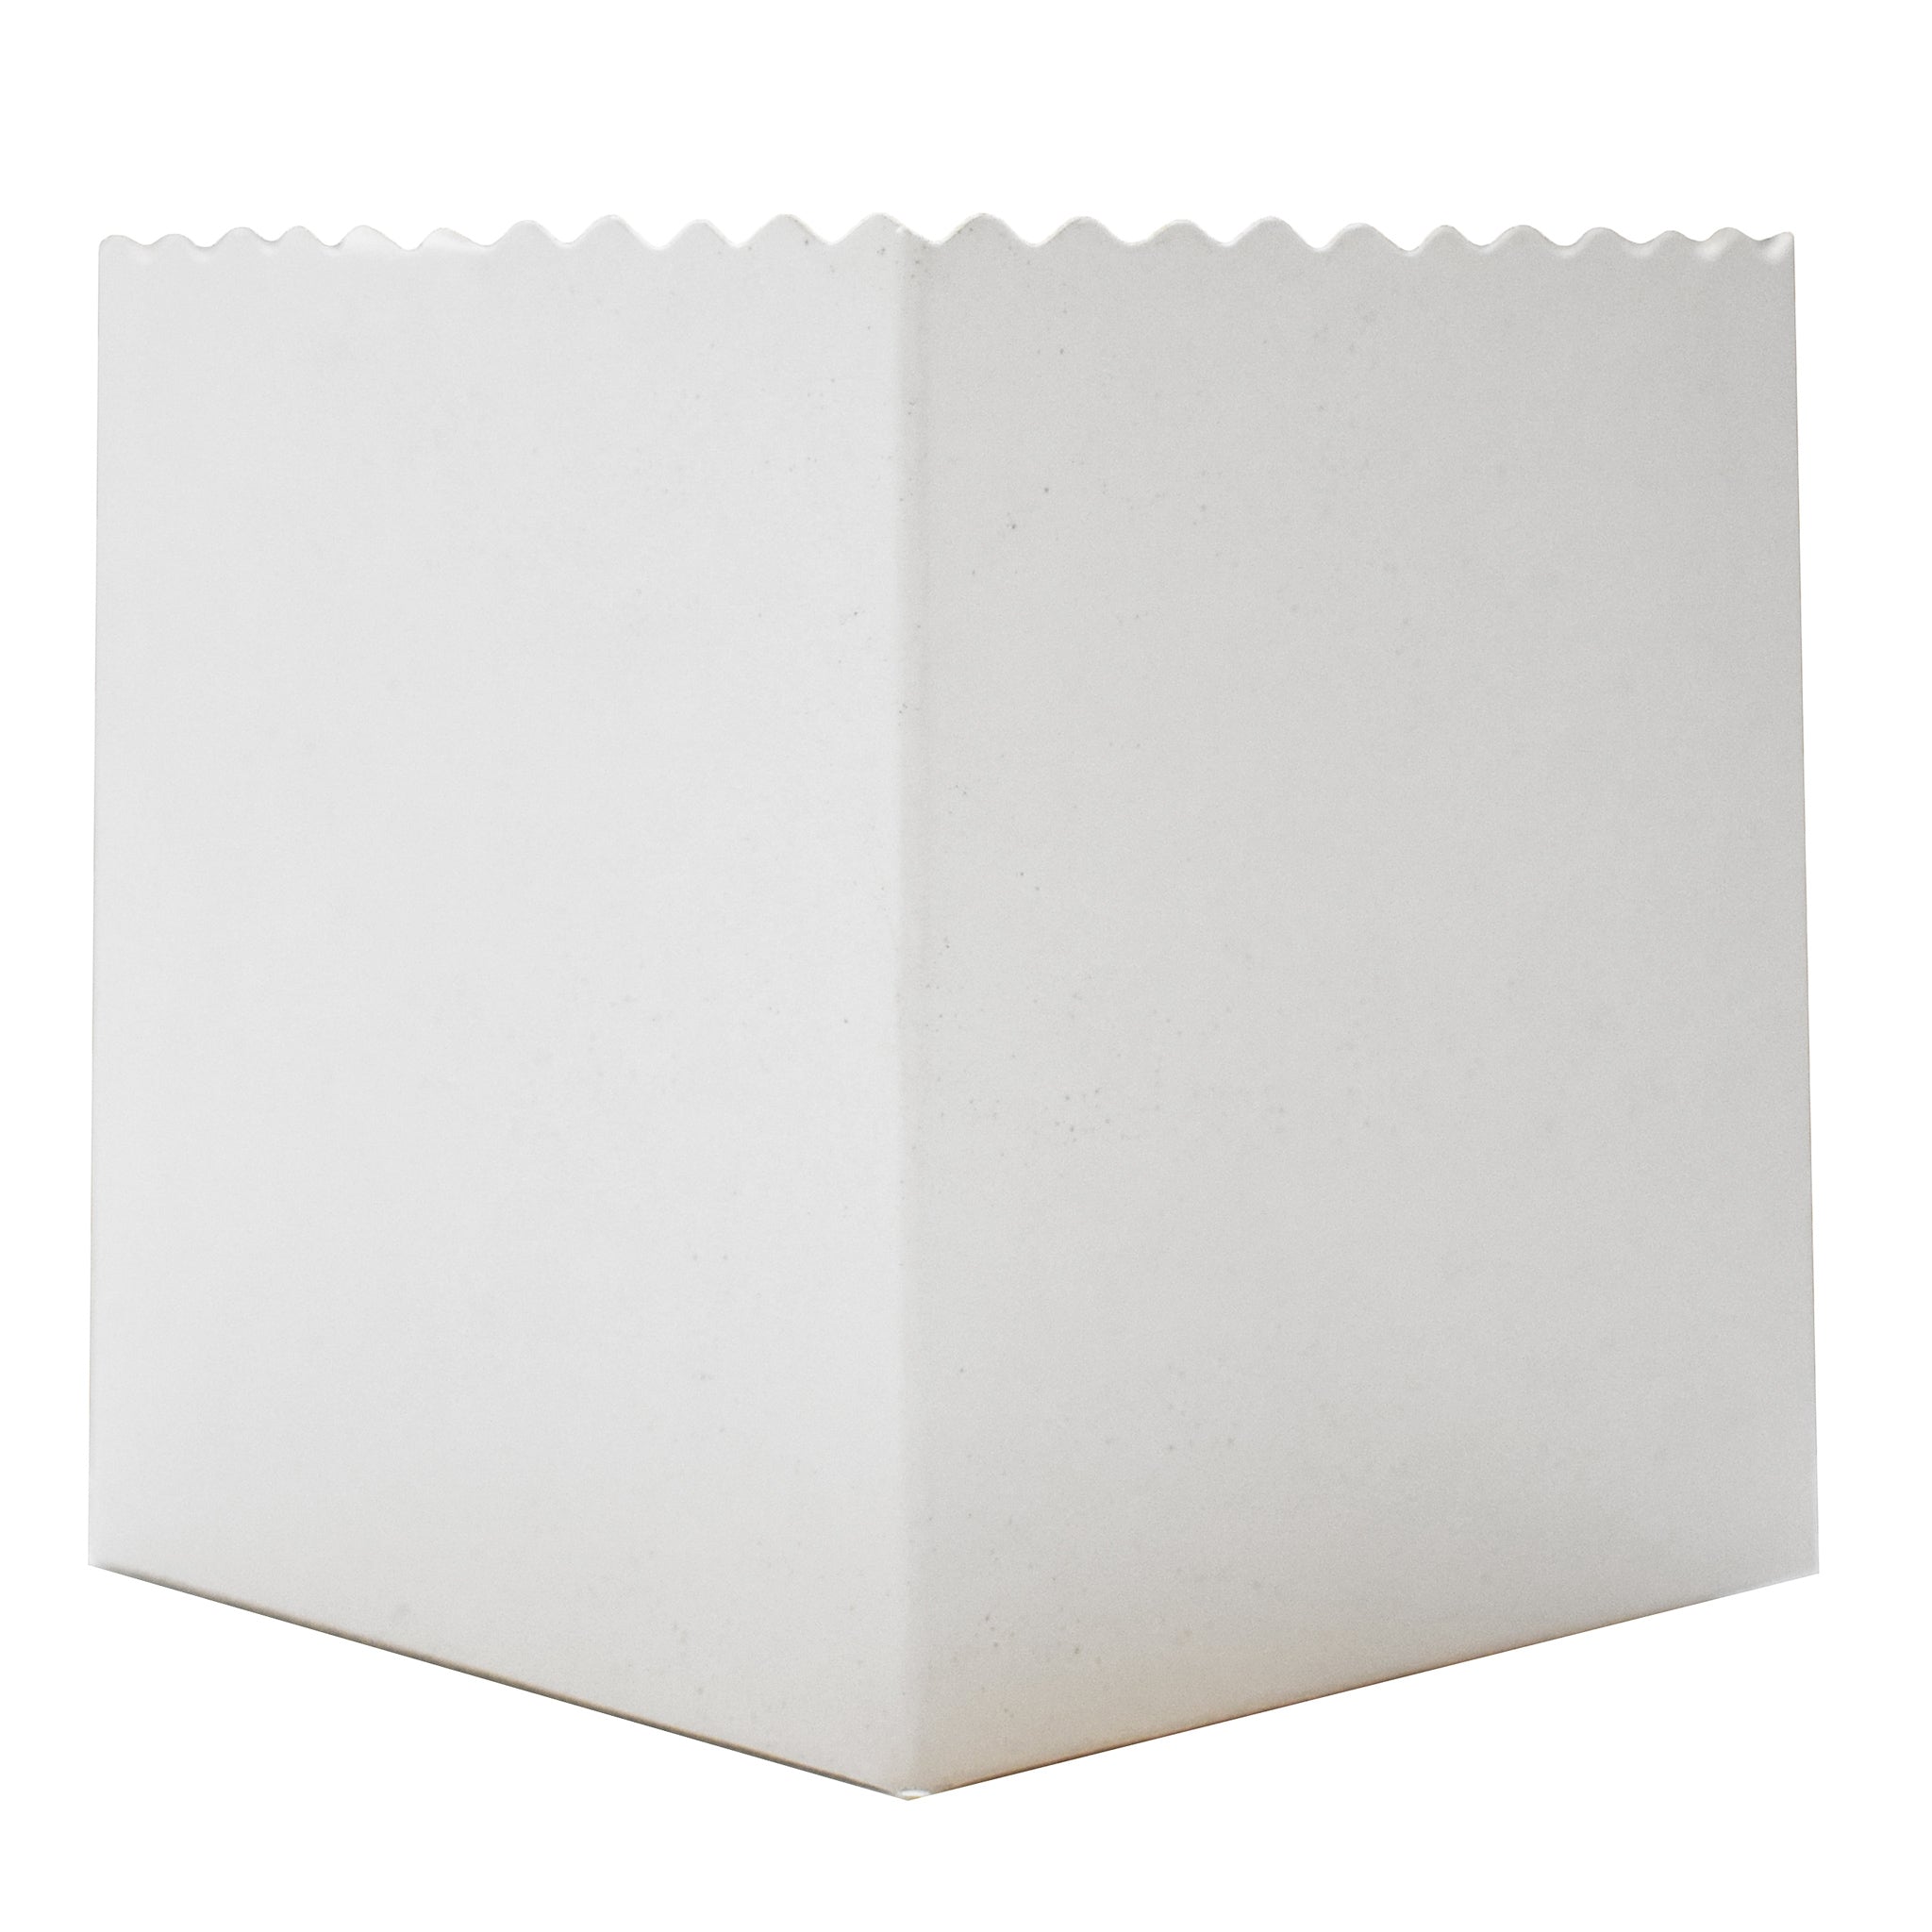 Small Plain White Popcorn Boxes